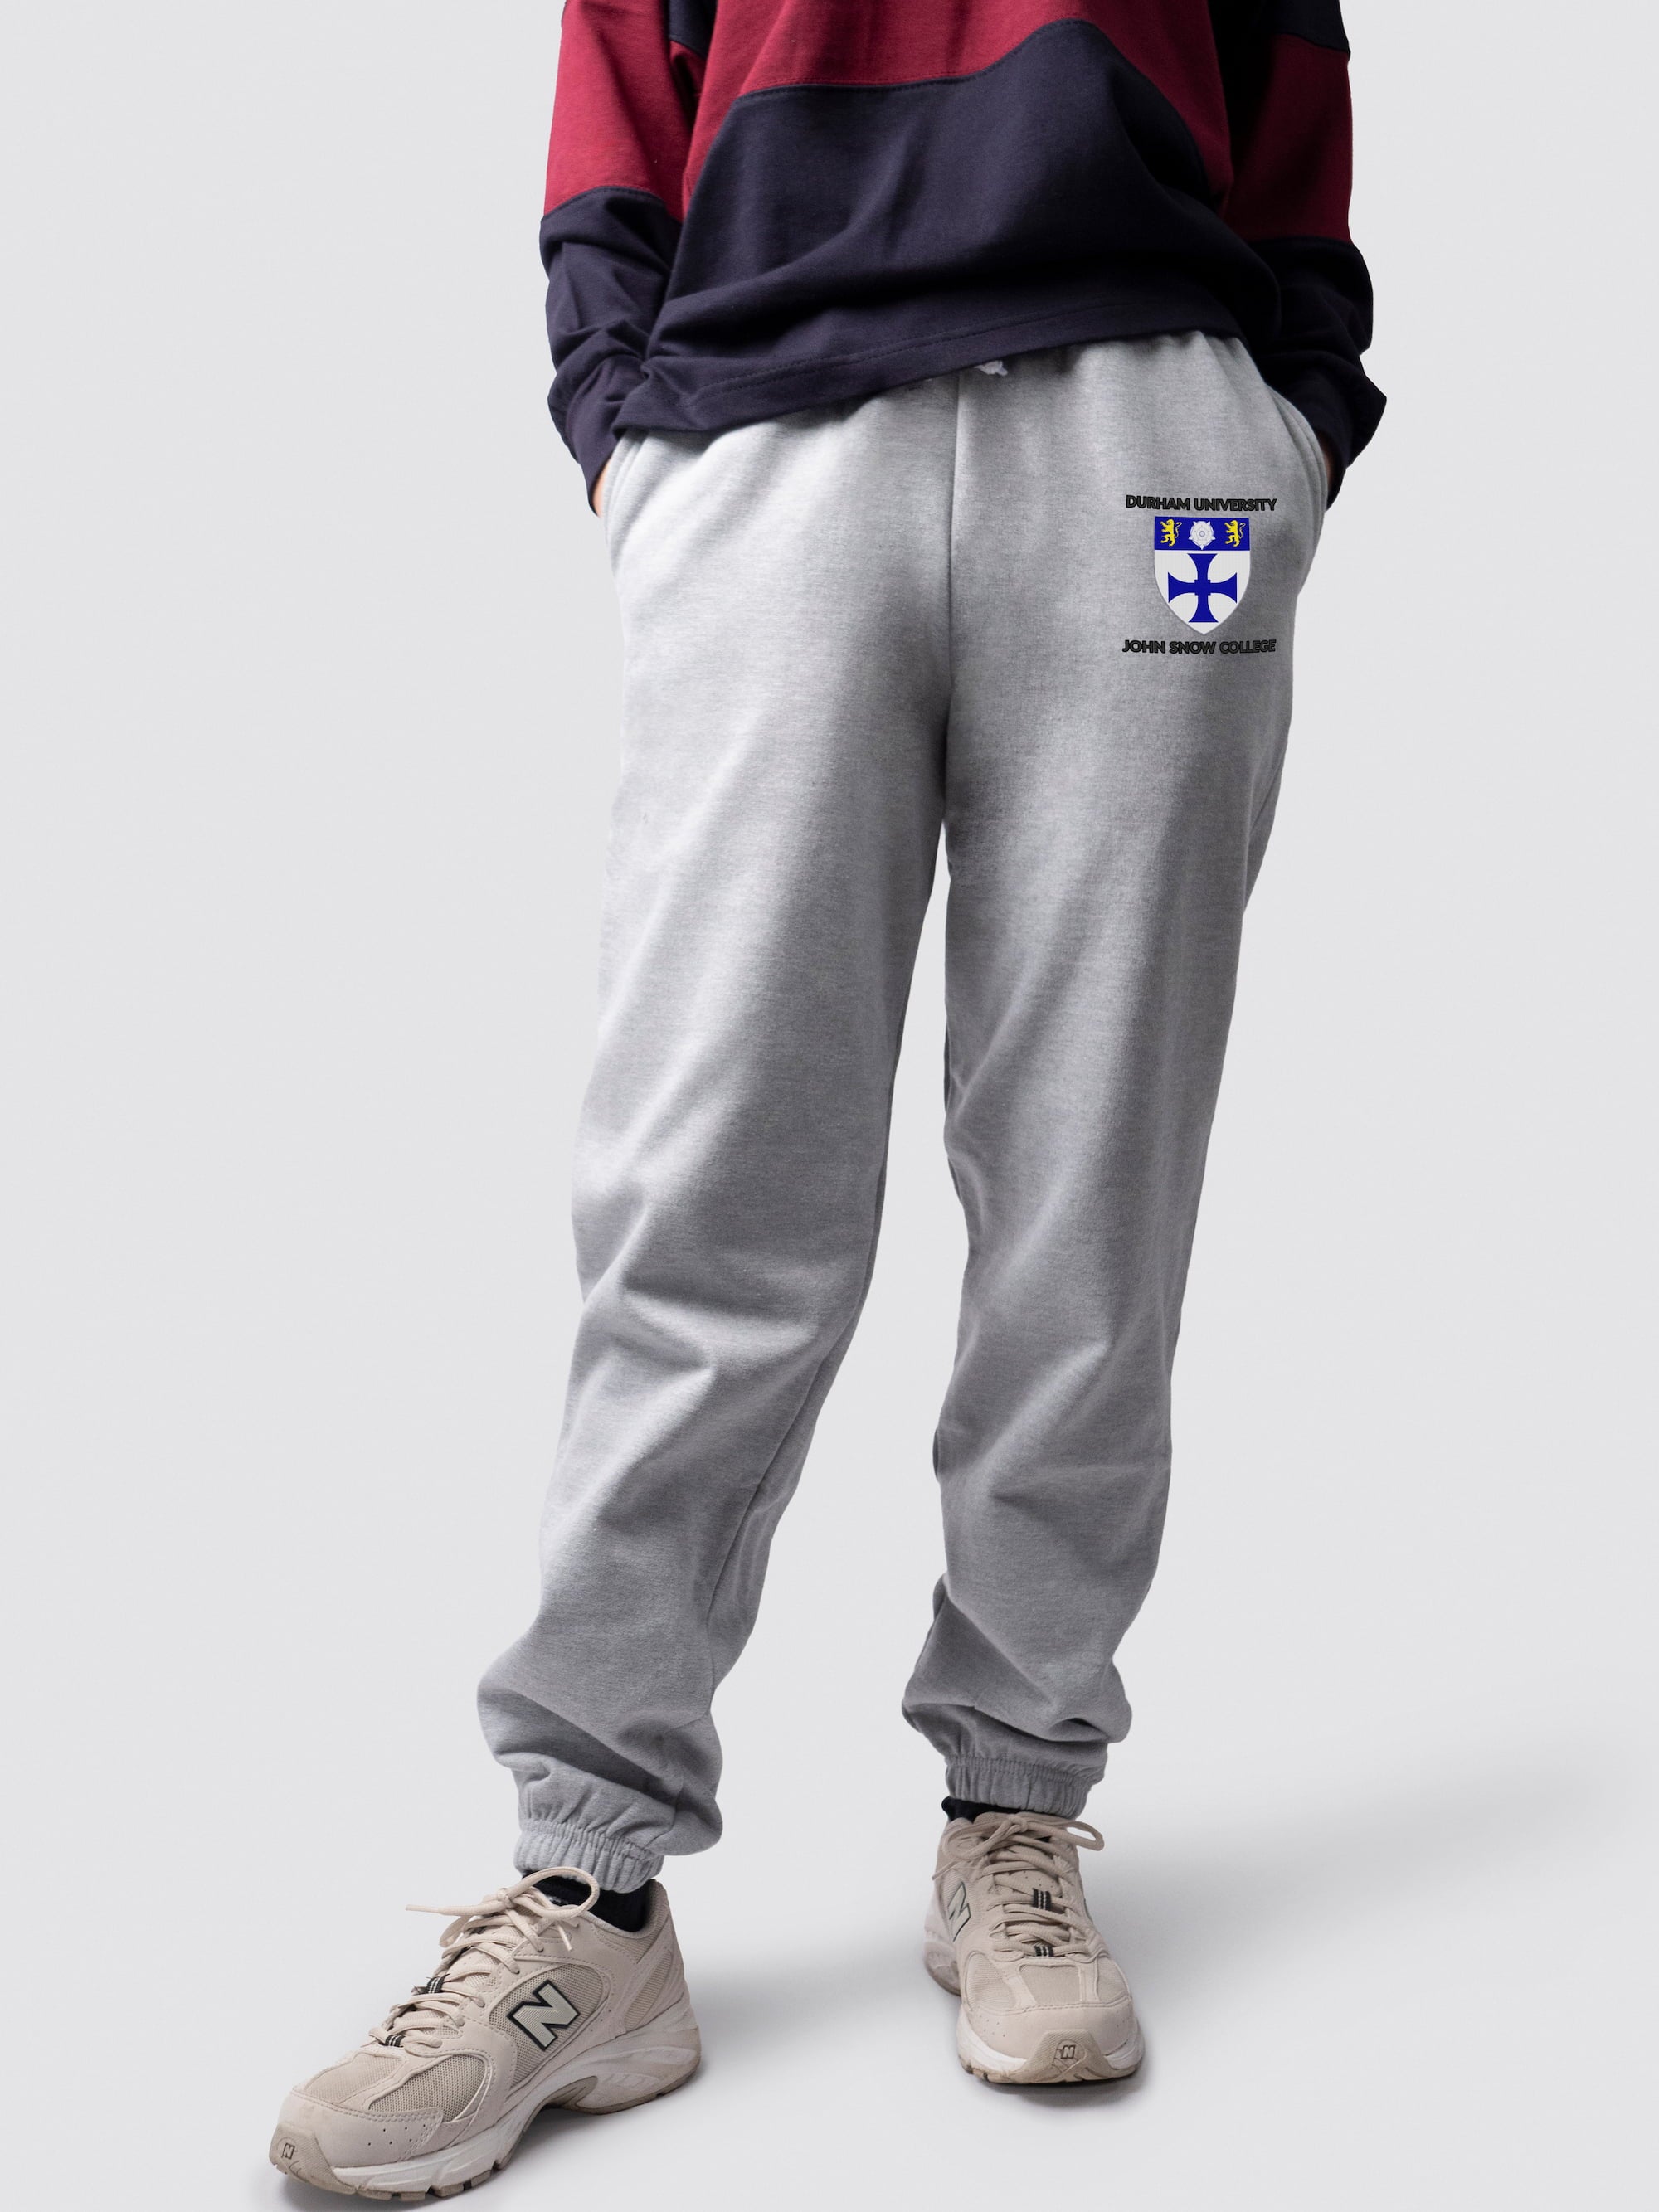 undergraduate cuffed sweatpants, made from soft cotton fabric, with John Snow logo